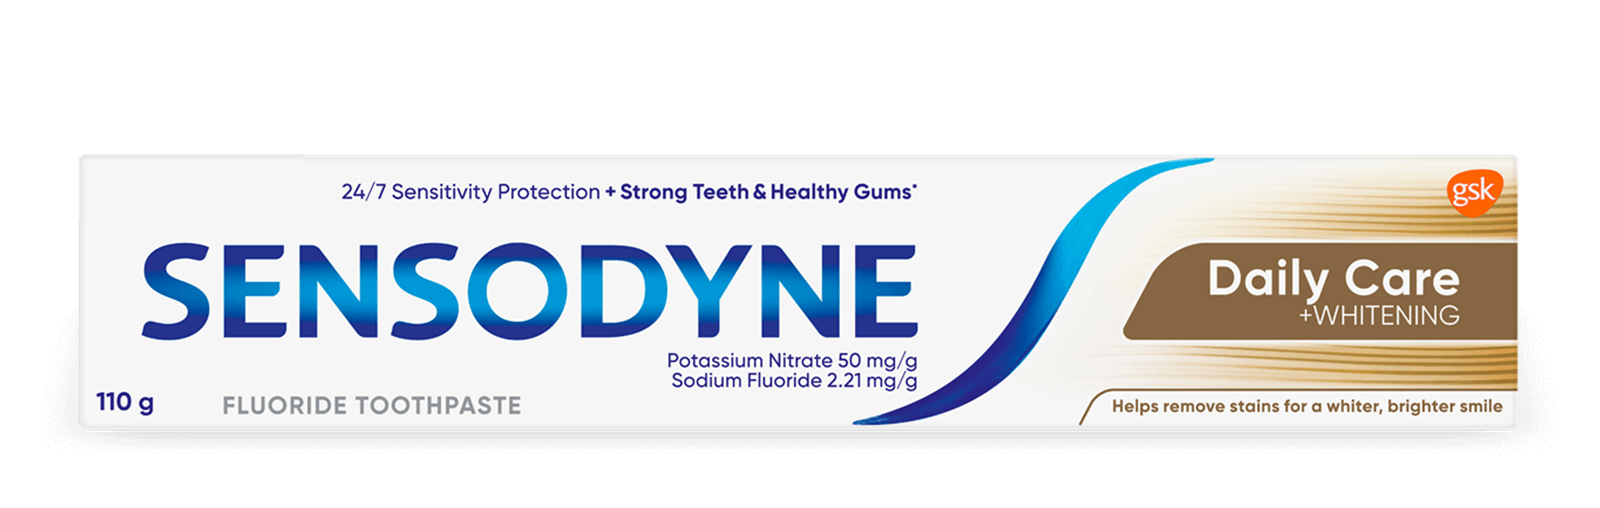 Sensodyne Daily Care + Whitening toothpaste